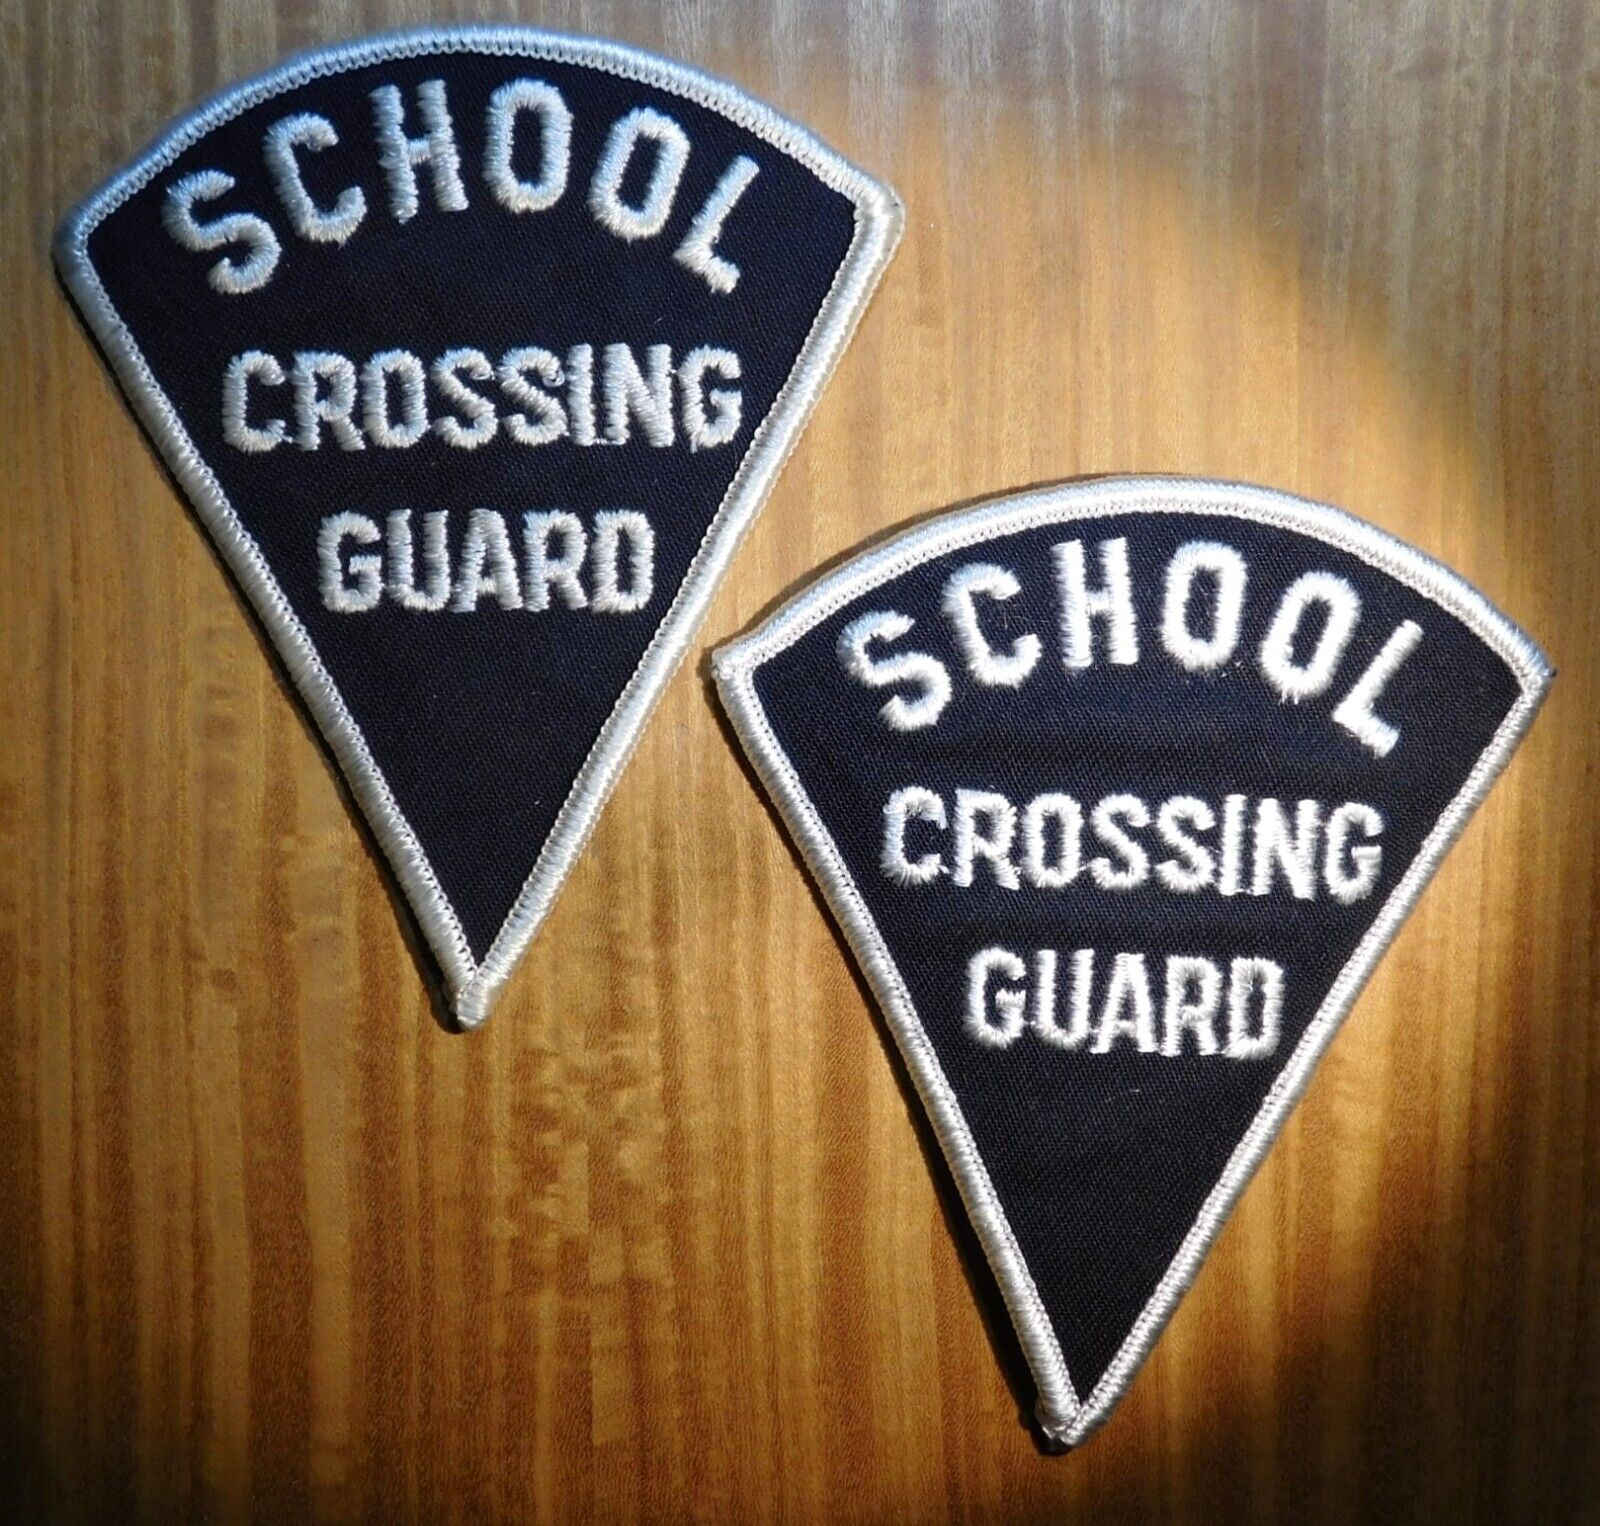 GEMSCO NOS Vintage Patch 1 PAIR - SCHOOL CROSSING GUARD - Original 1990 MINT